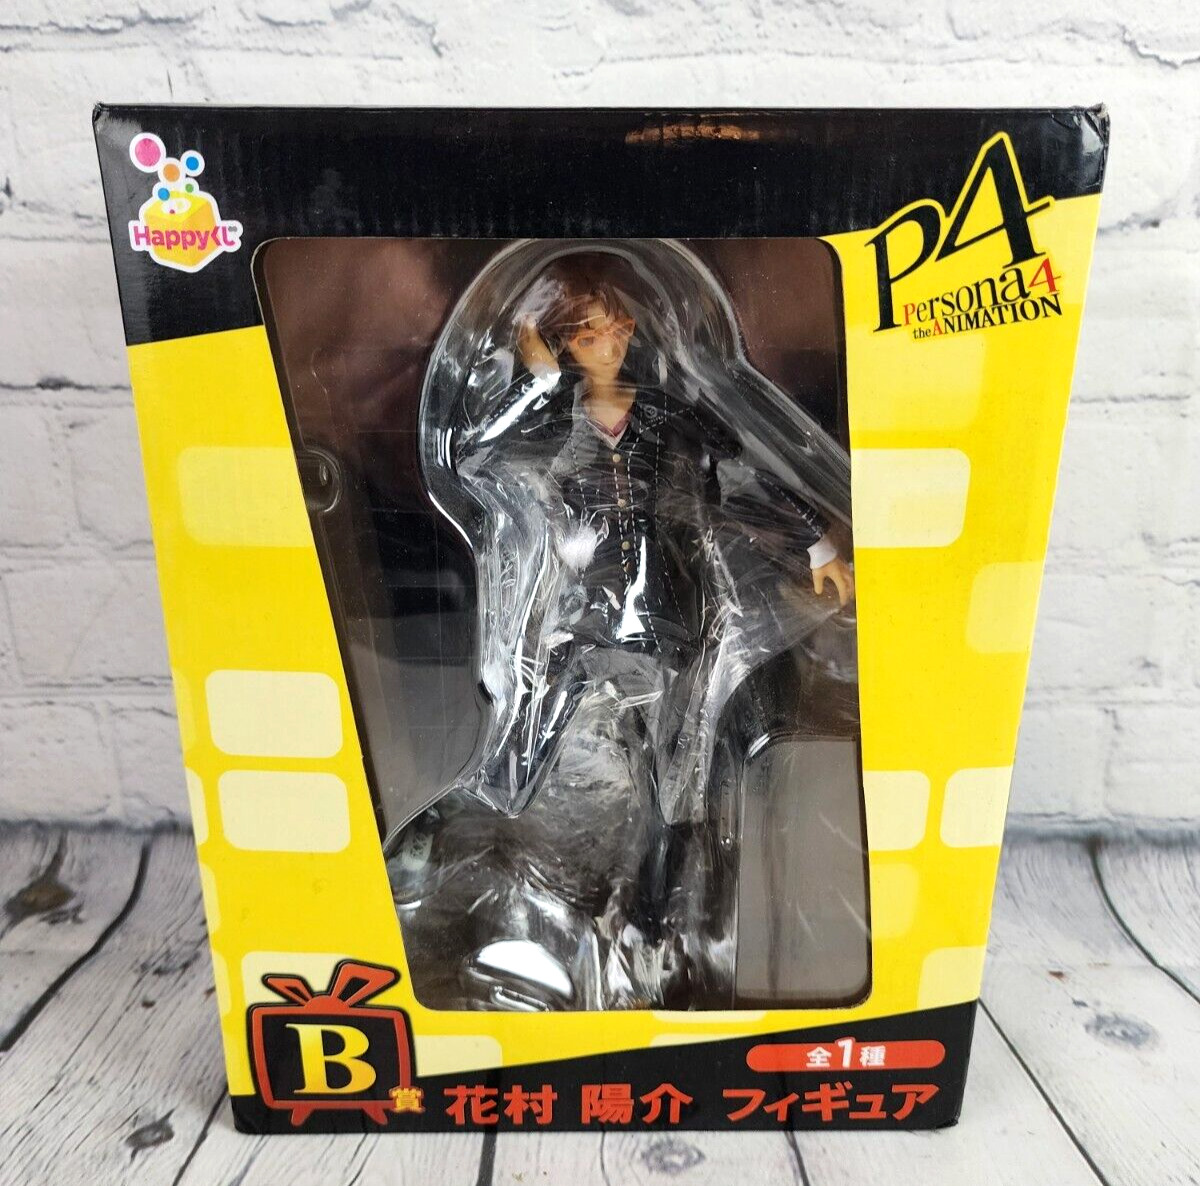 New Persona 4 The Animation Happy Kuji Prize B Yosuke Hanamura Figure Statue